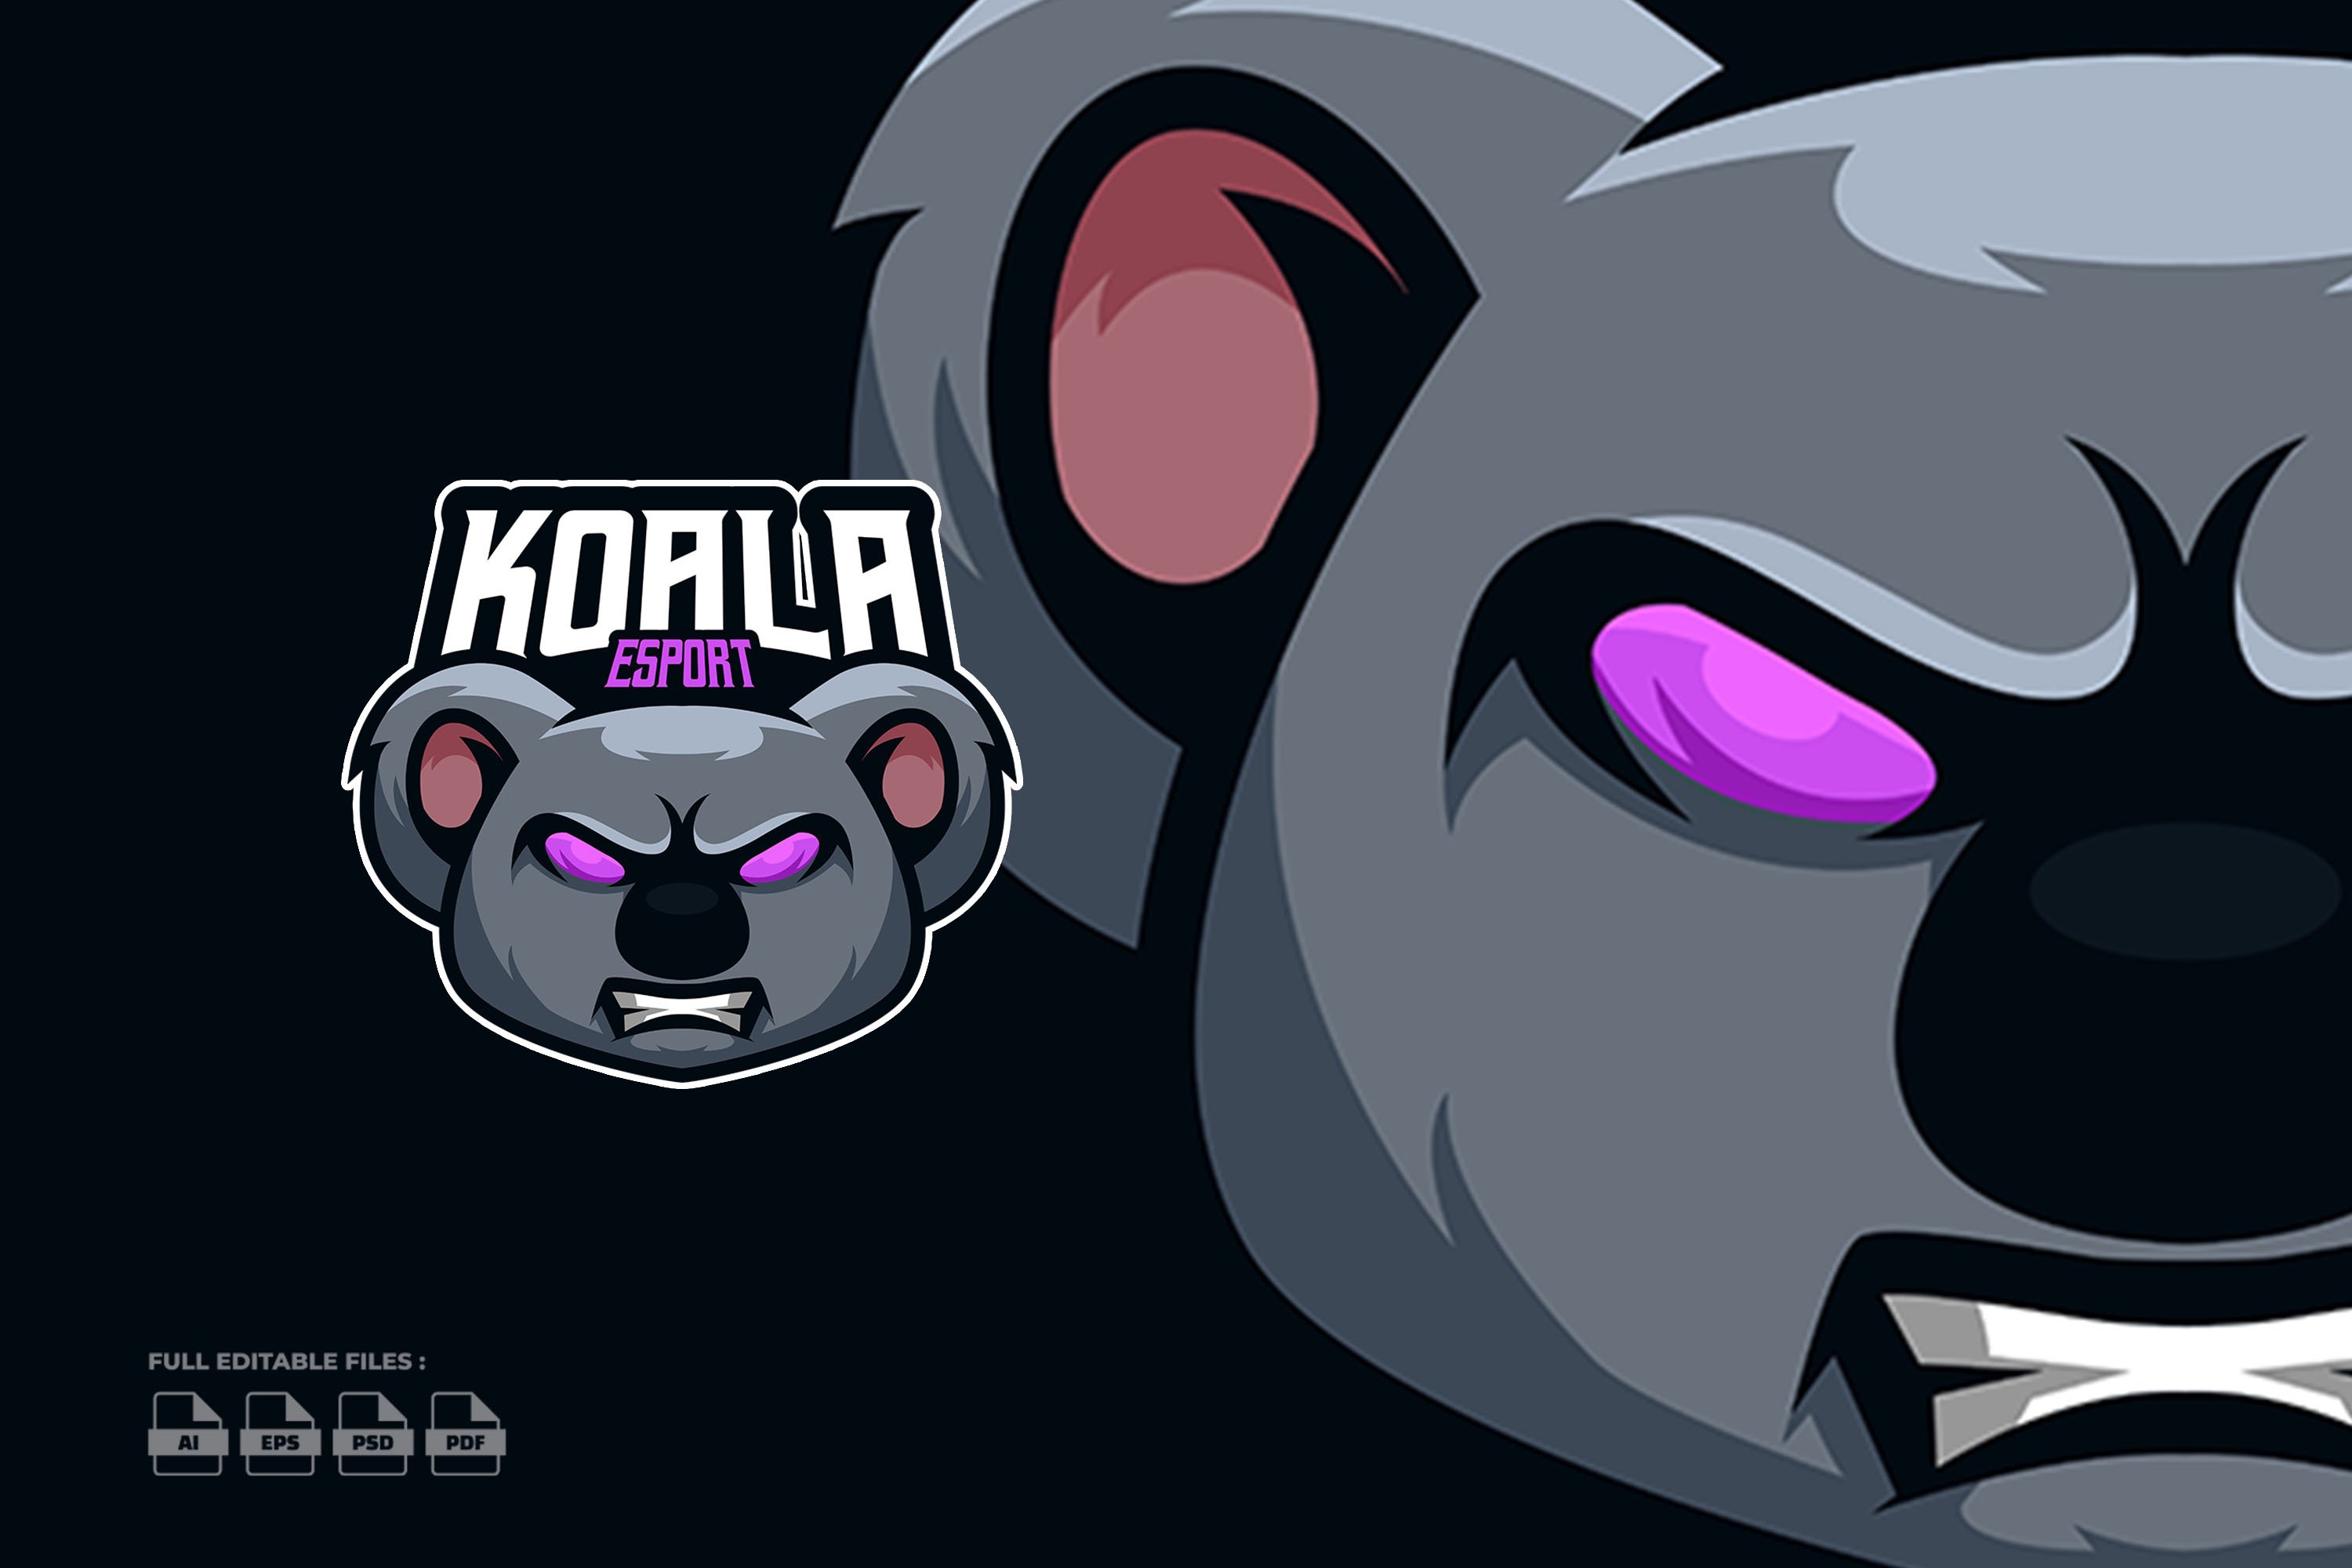 Koala Mascot Logo for Esports Team cover image.